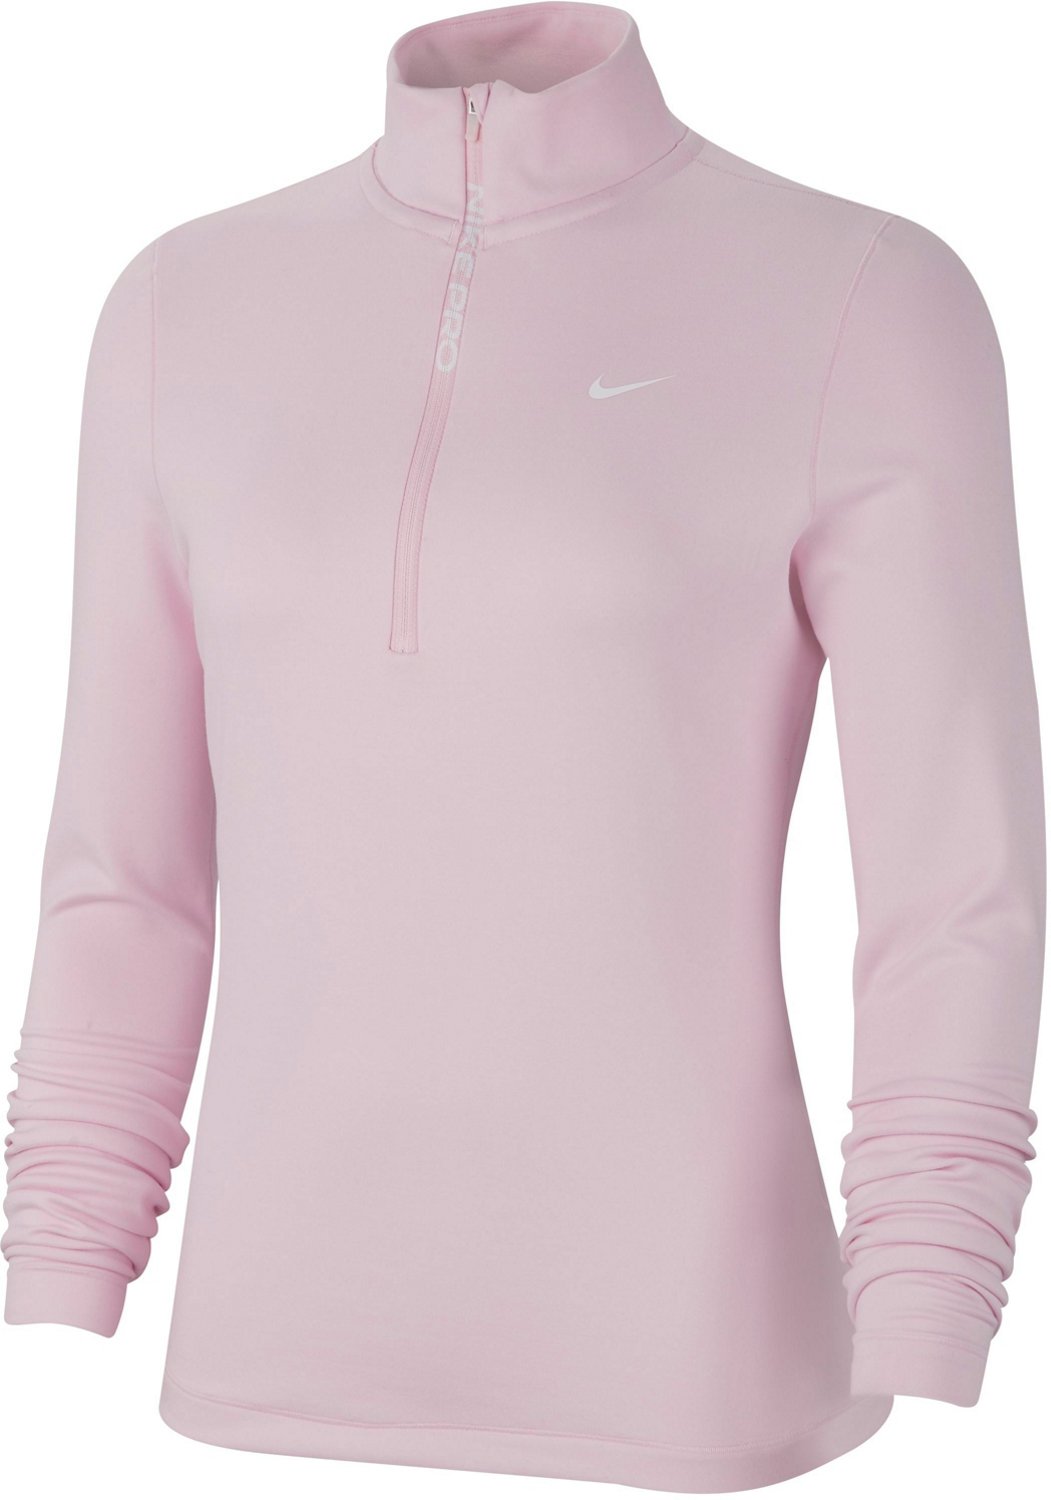 Nike Women's Nike Pro Therma 1/2 Zip Long Sleeve Performance Top | Academy